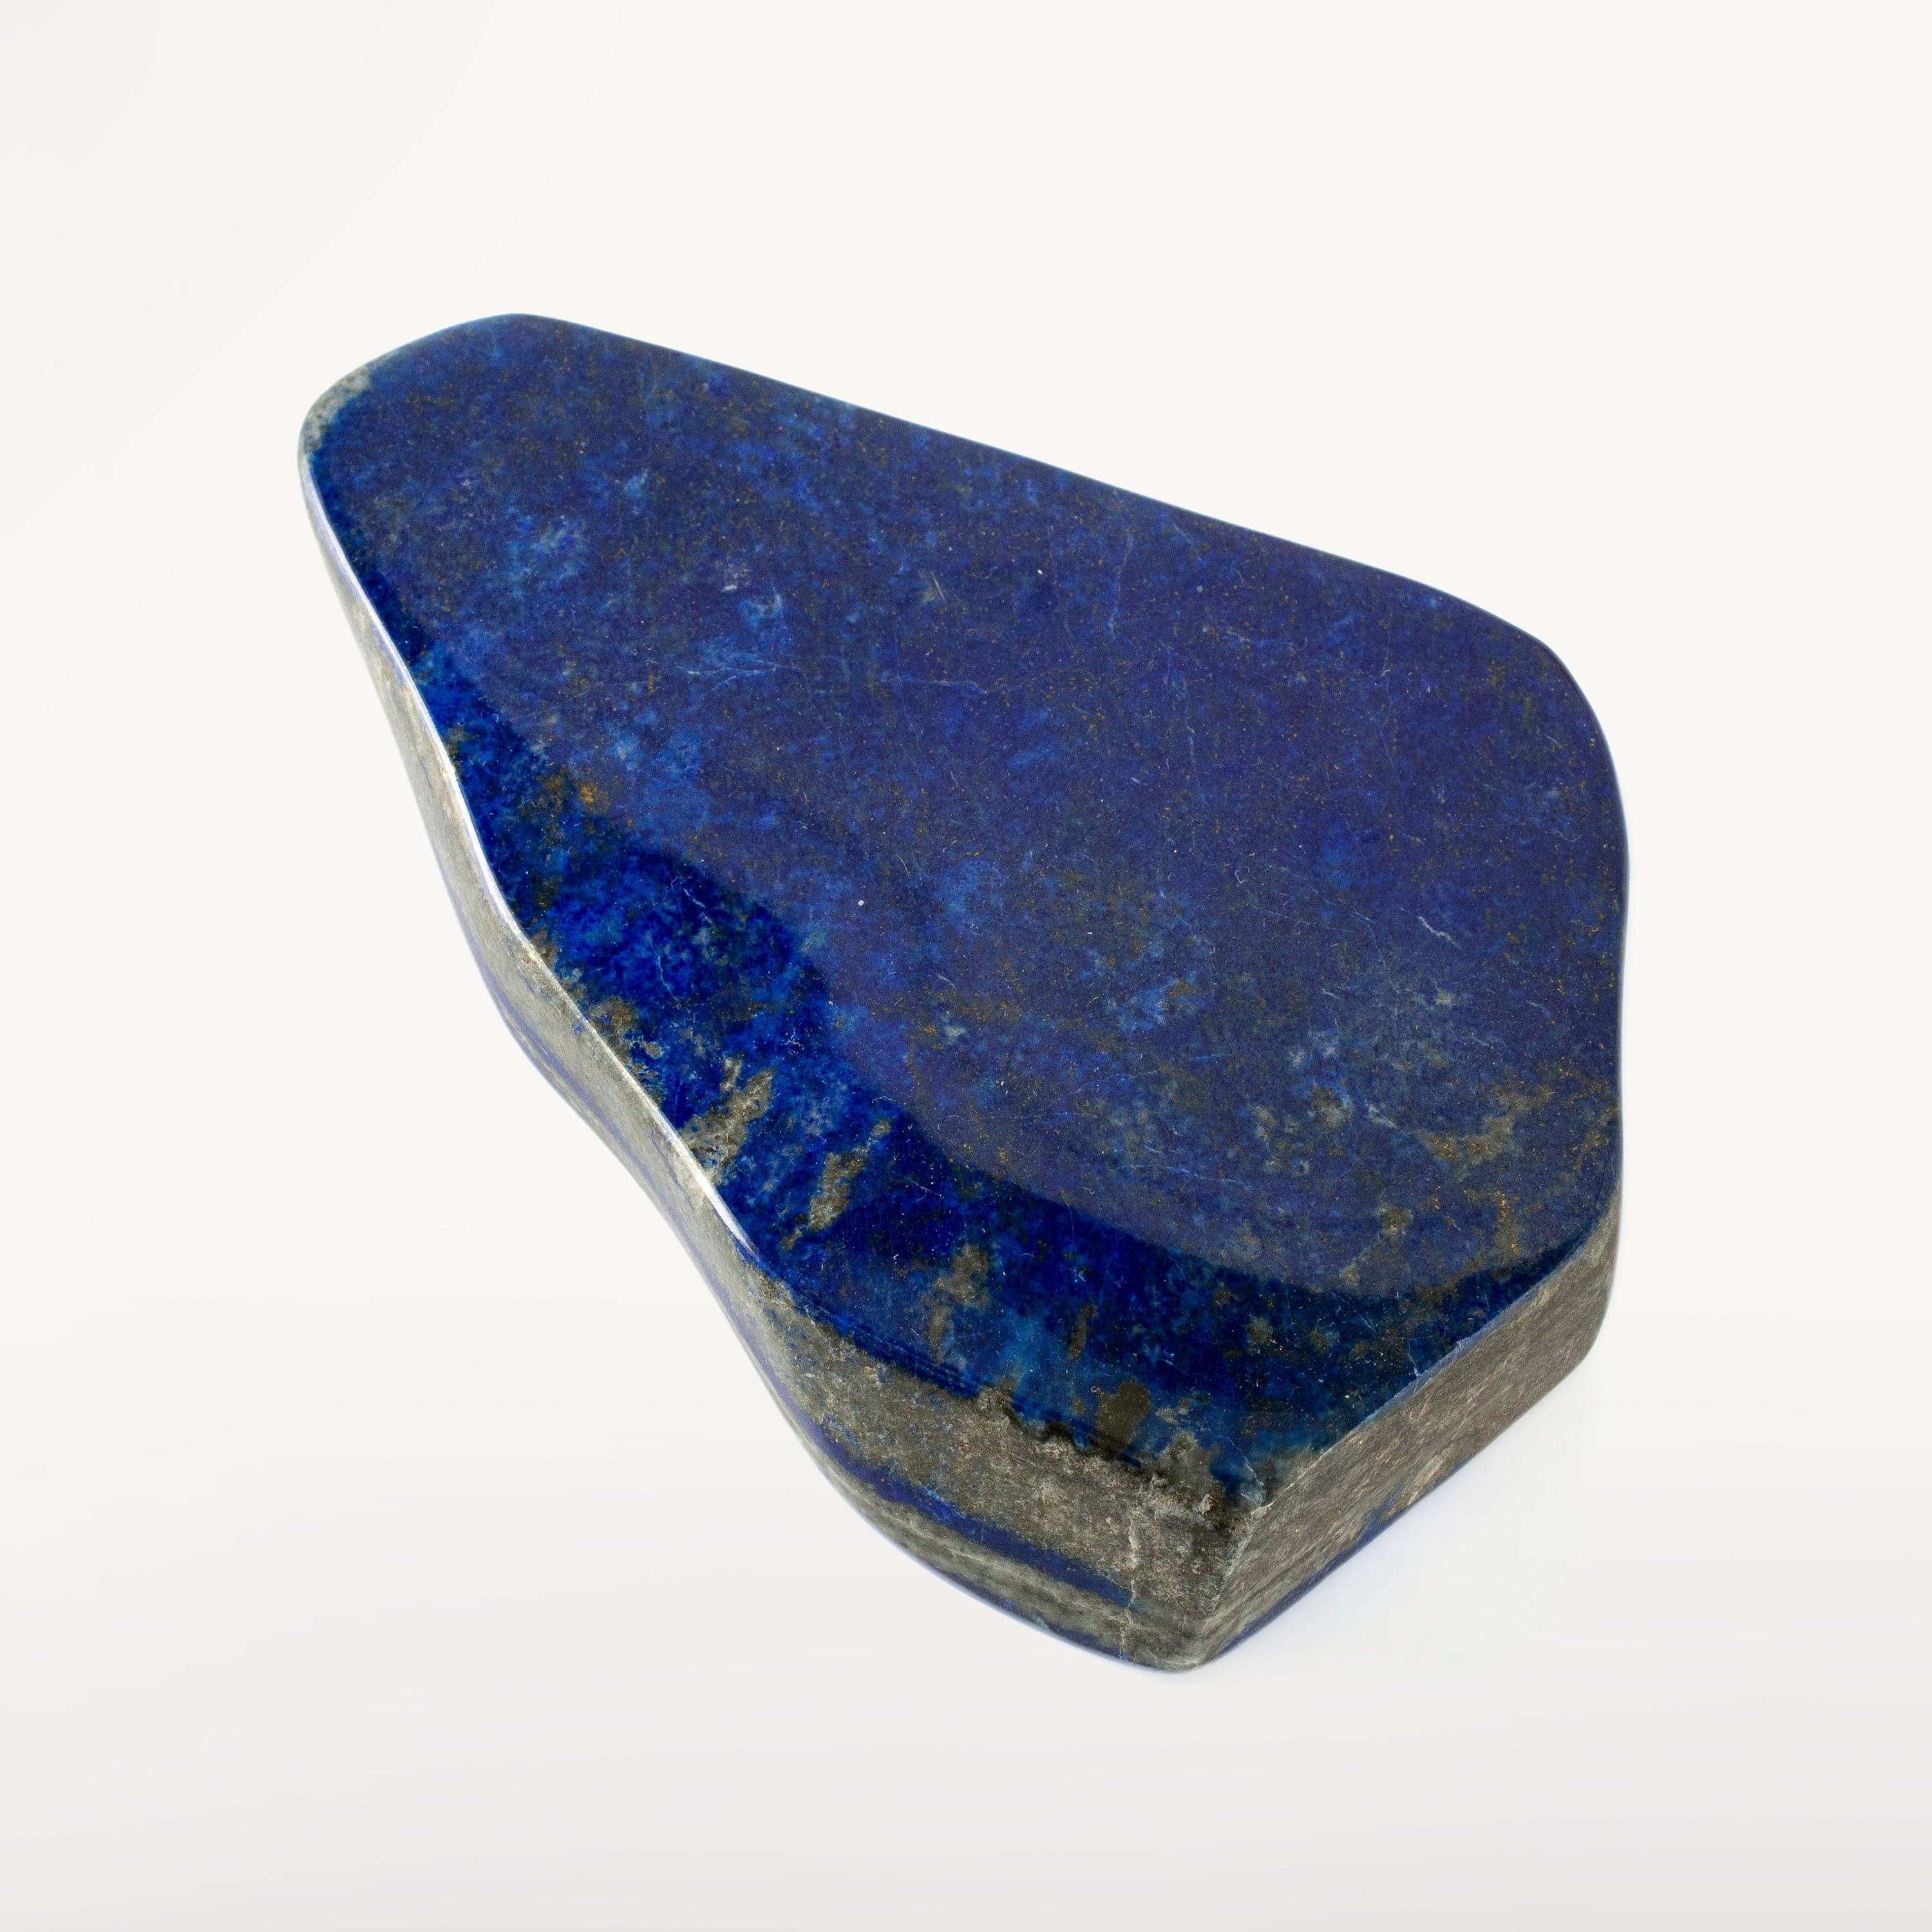 Kalifano Lapis Lapis Lazuli Freeform from Afghanistan - 6.5" / 923 grams LP950.002